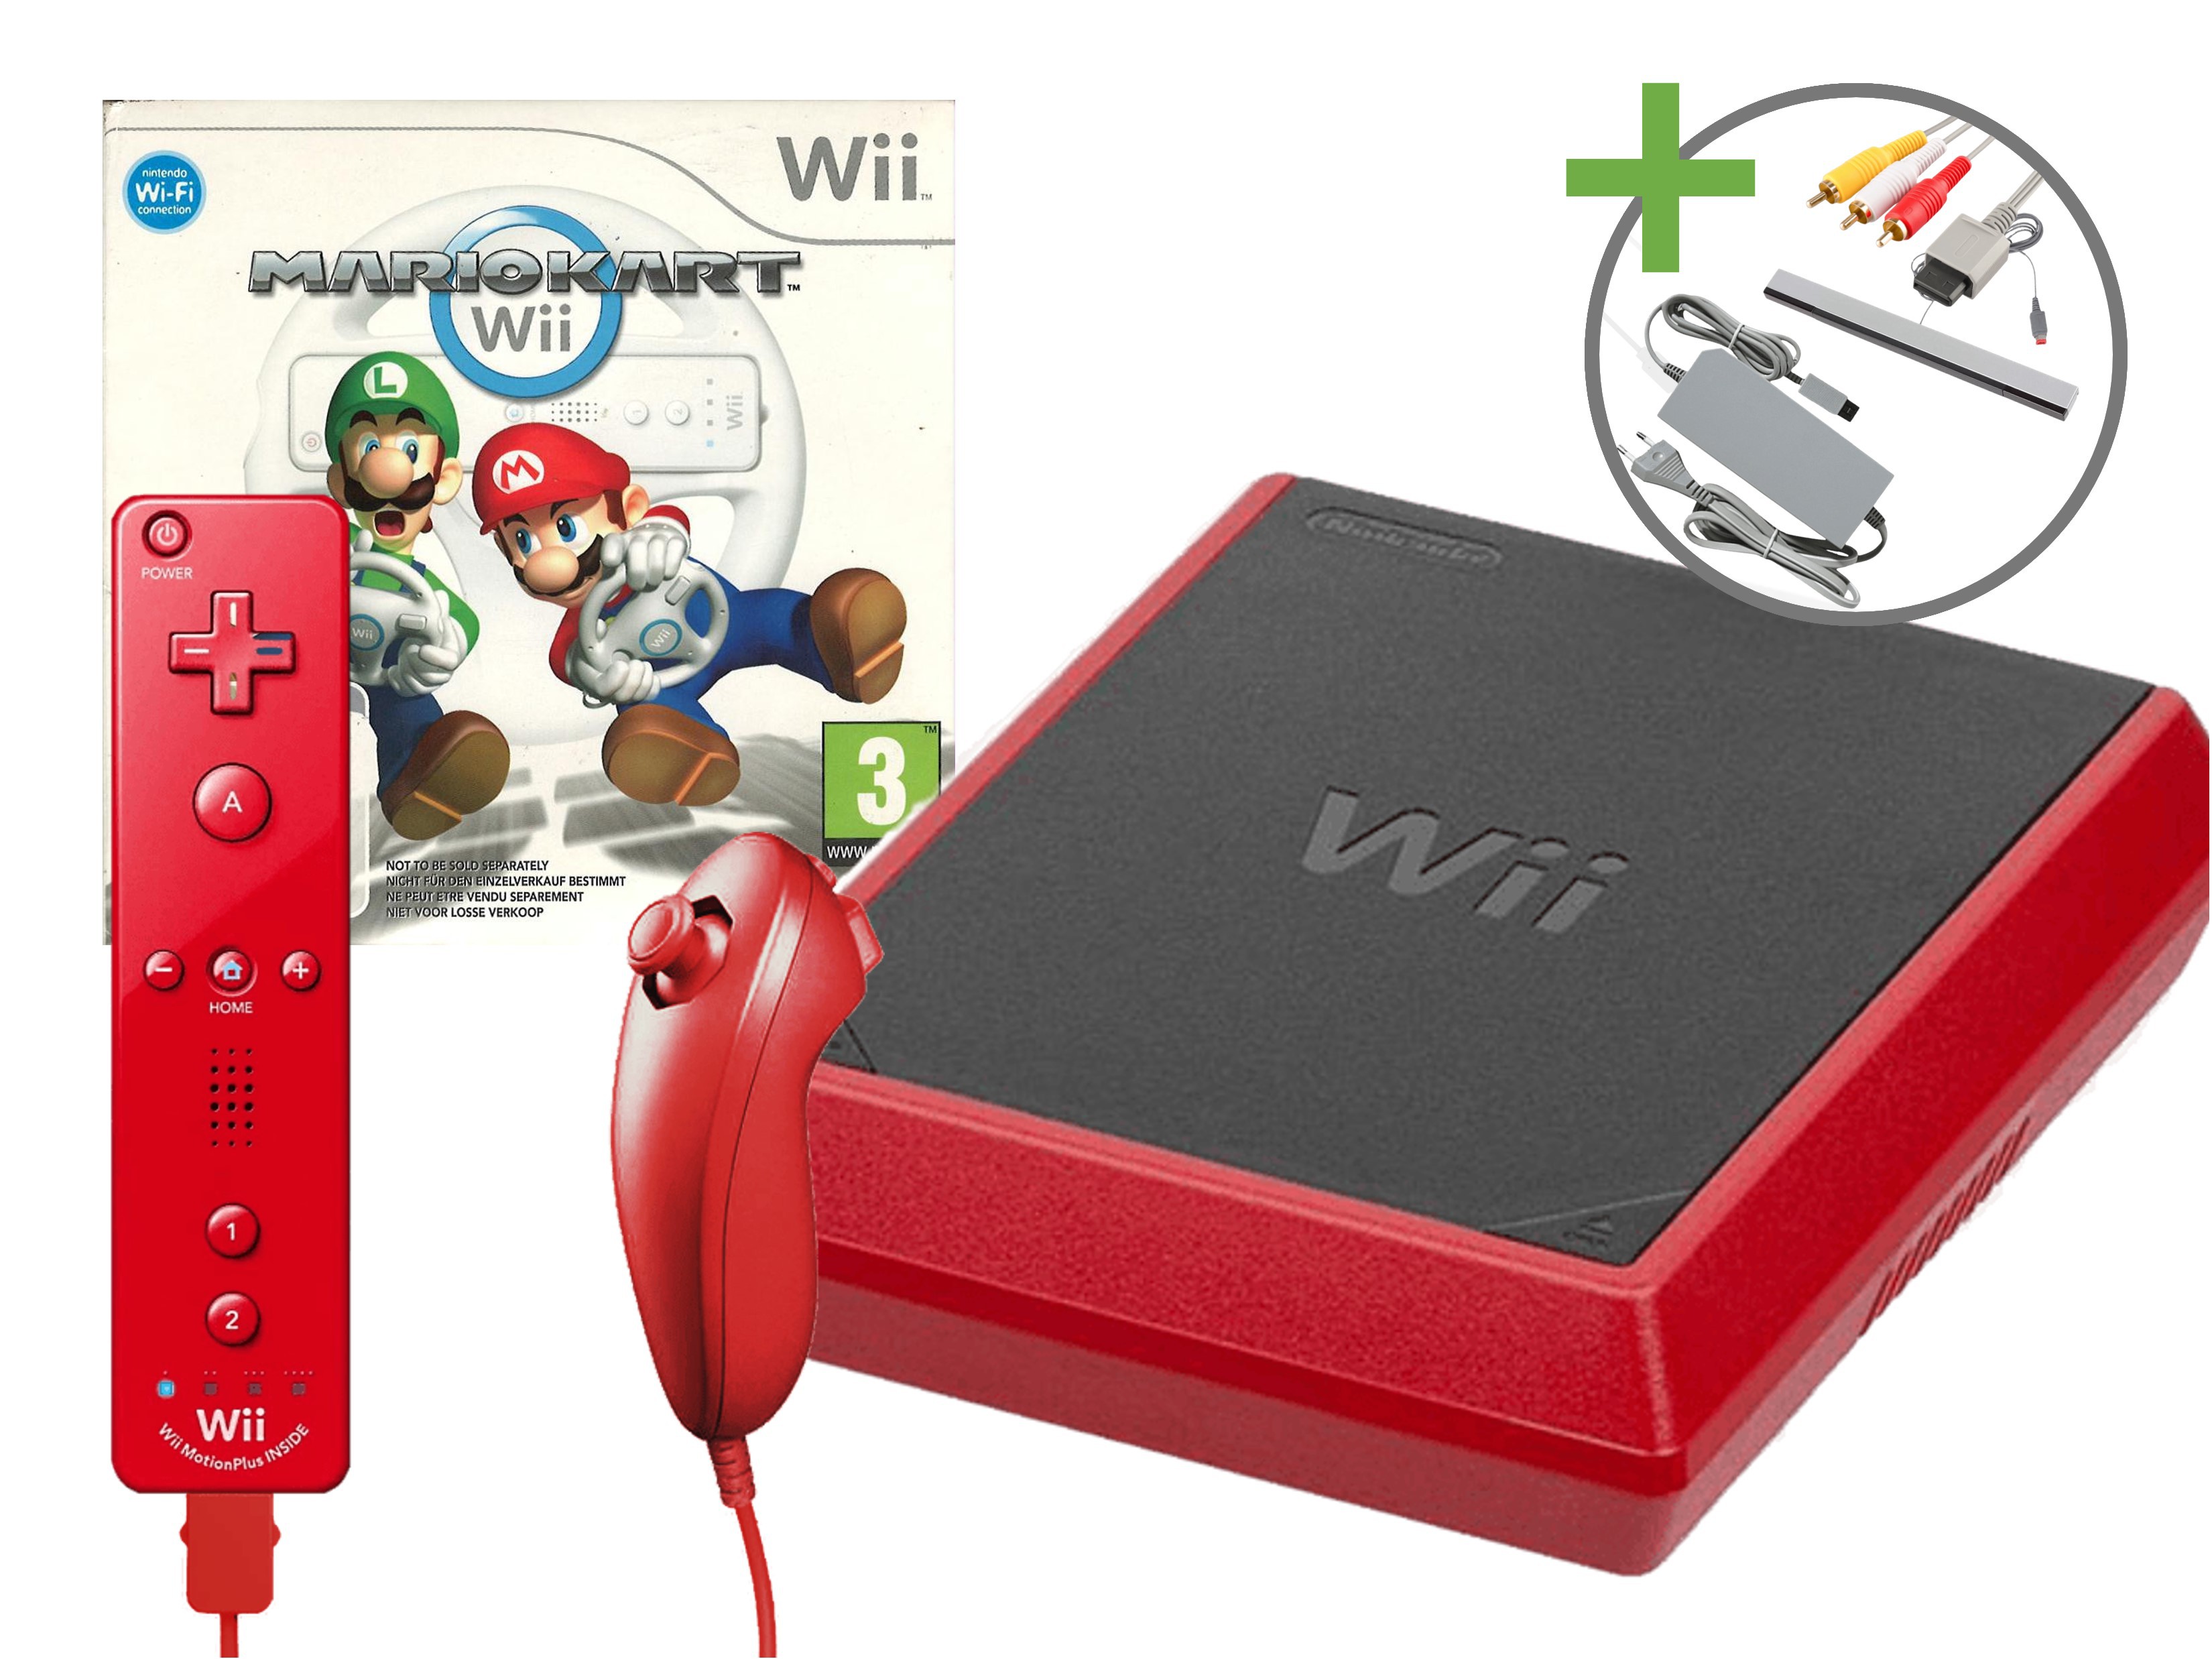 Nintendo Wii Mini Starter Pack - Mario Kart Wii Edition - Wii Hardware